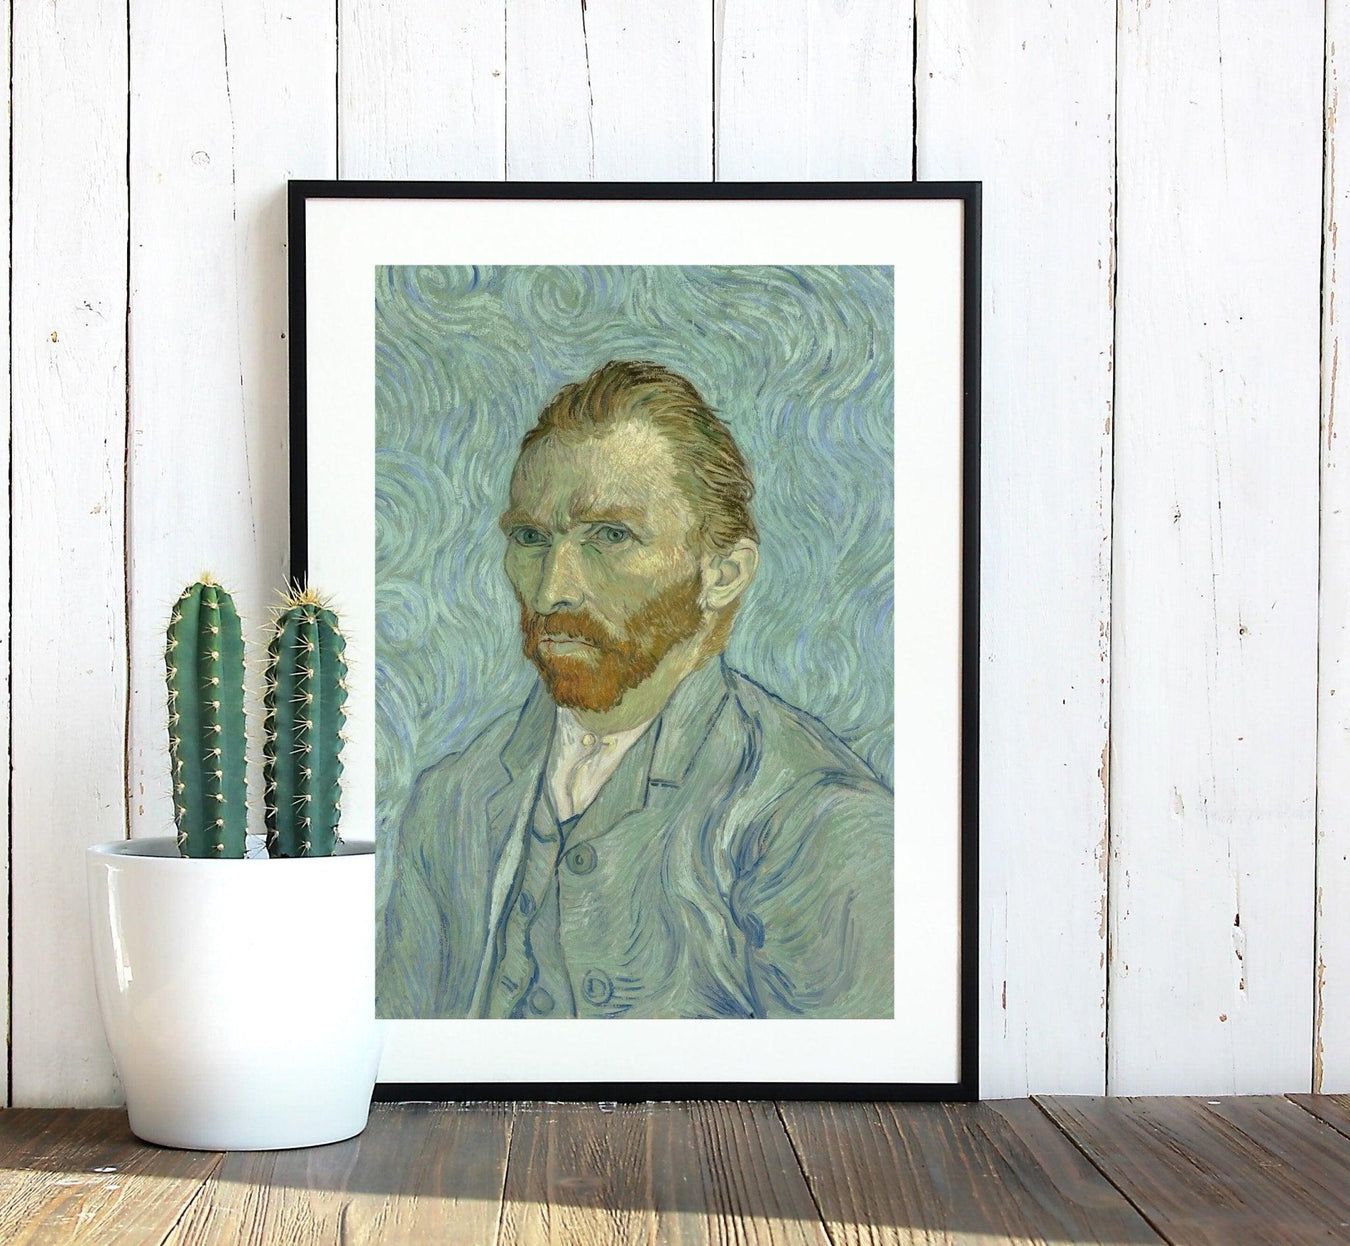 Picture Framed Van Gogh Wall Art - Modern Memory Design Picture frames - New Jersey Frame Shop Custom Framing